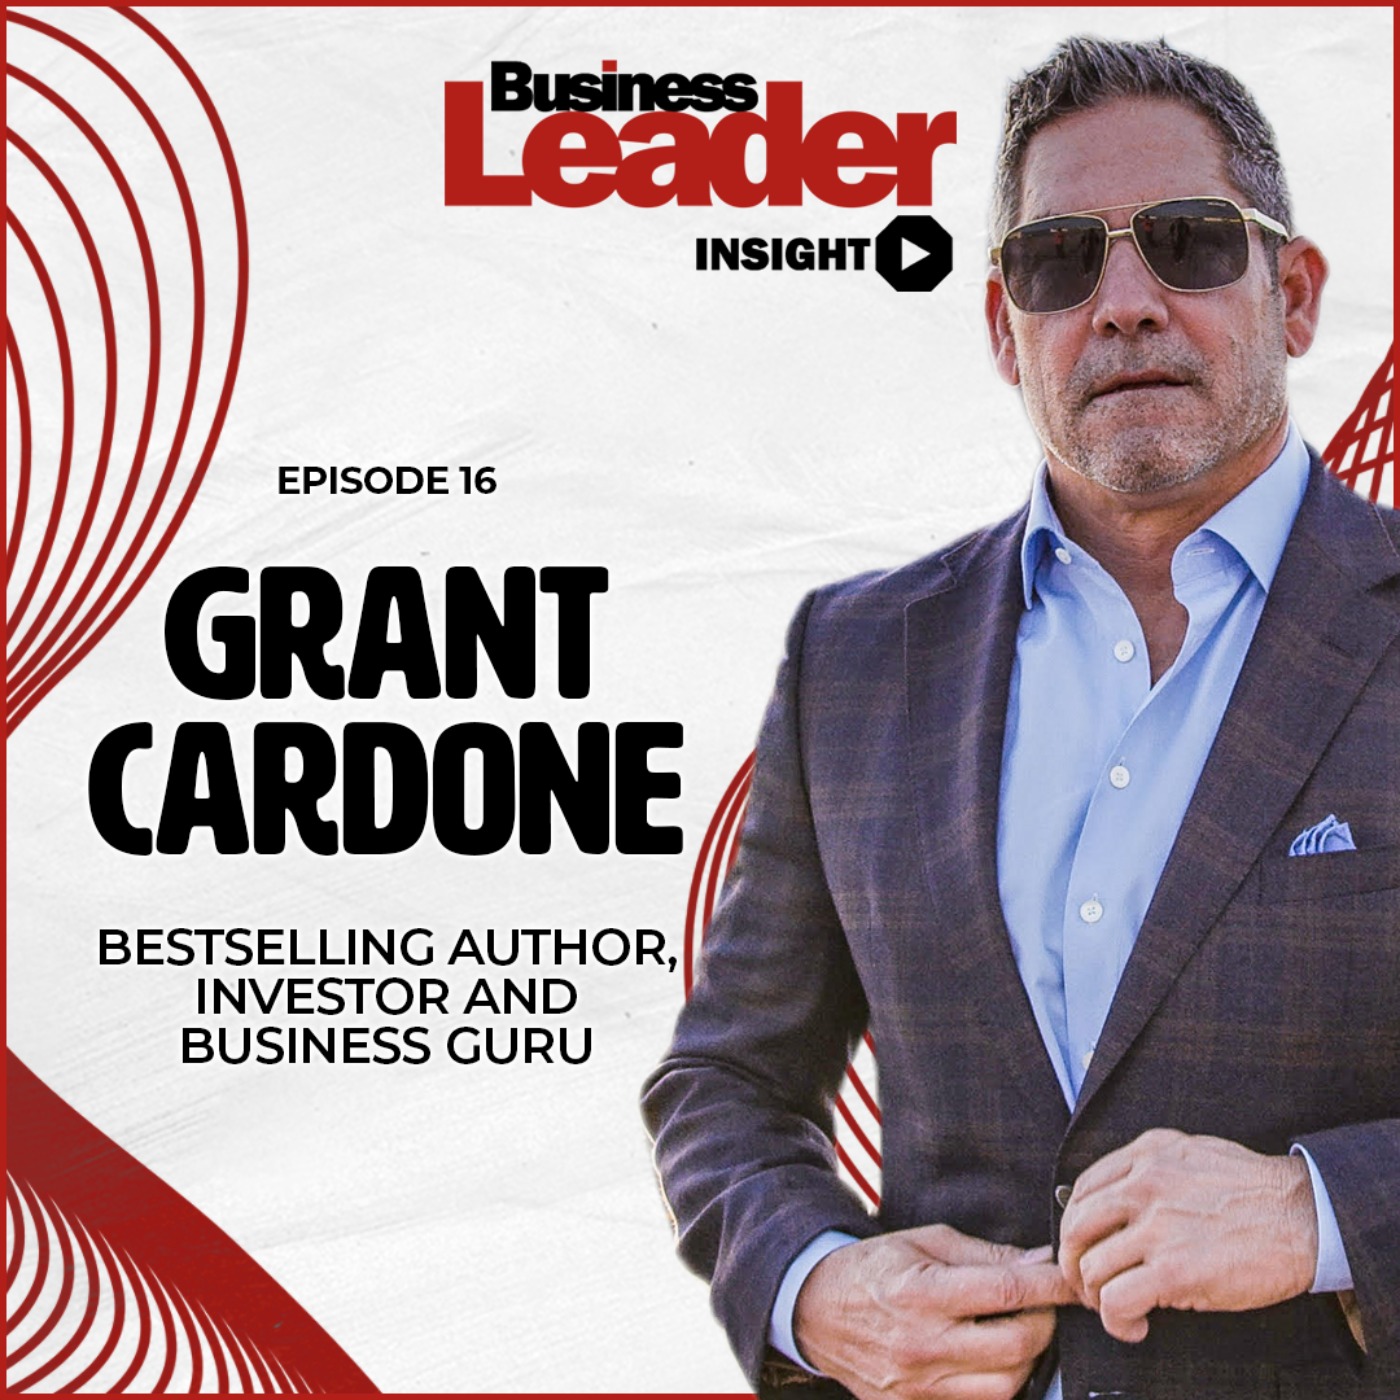 Grant Cardone: bestselling author, investor, business guru & creator of the 10x movement